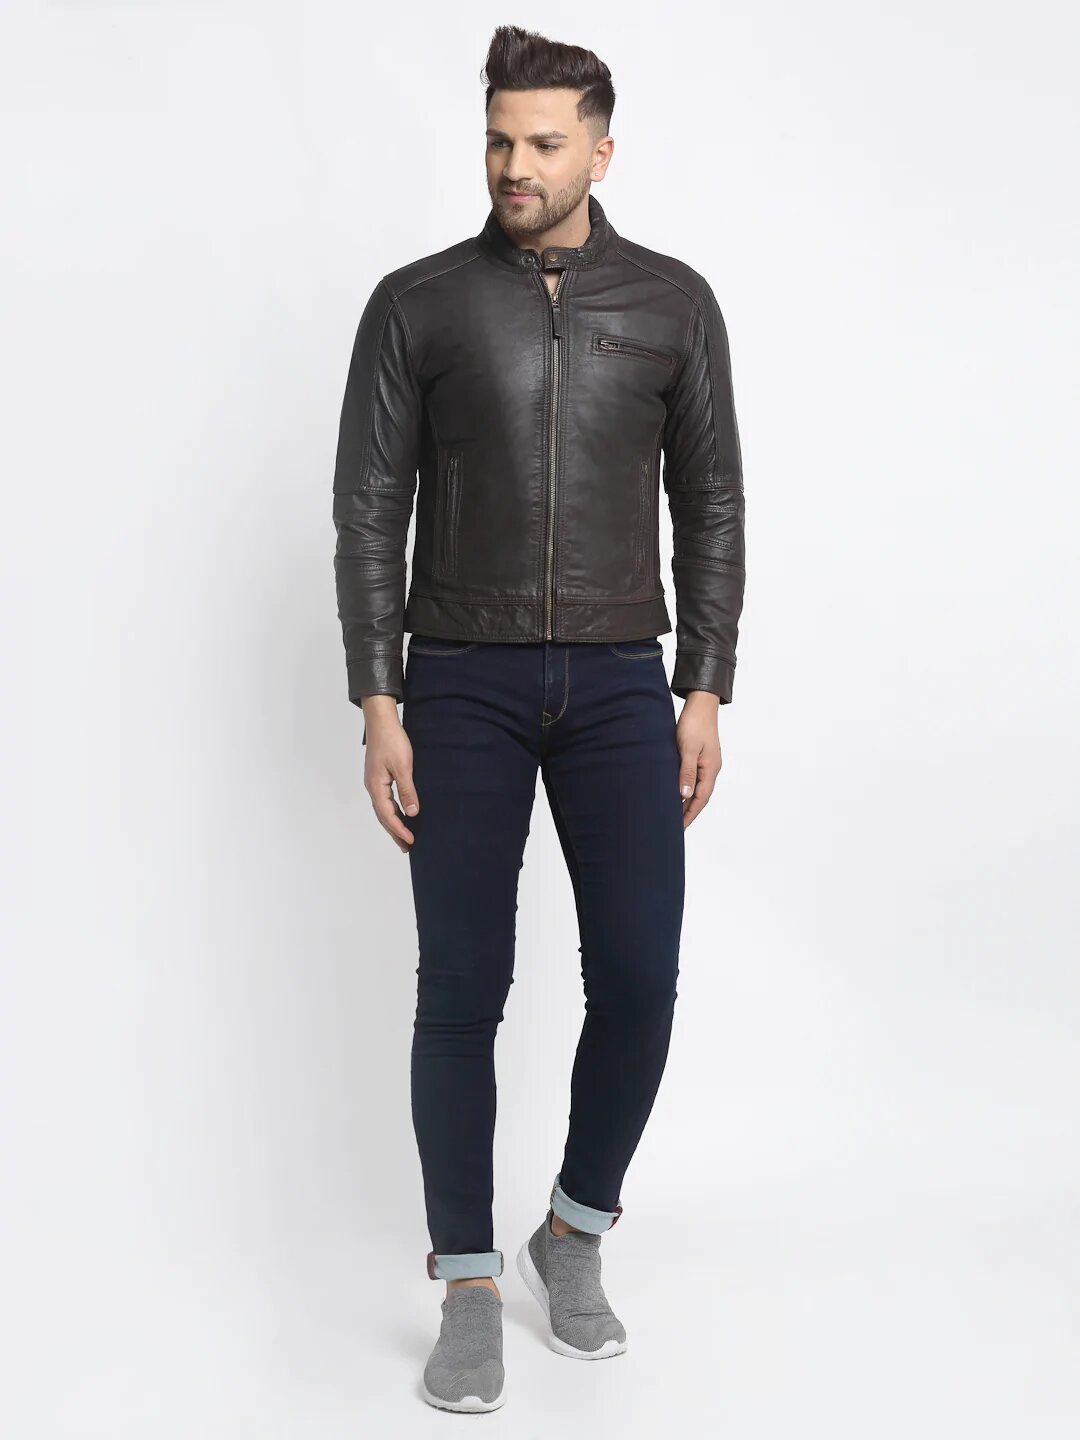 Dean Brown Biker Leather Jacket